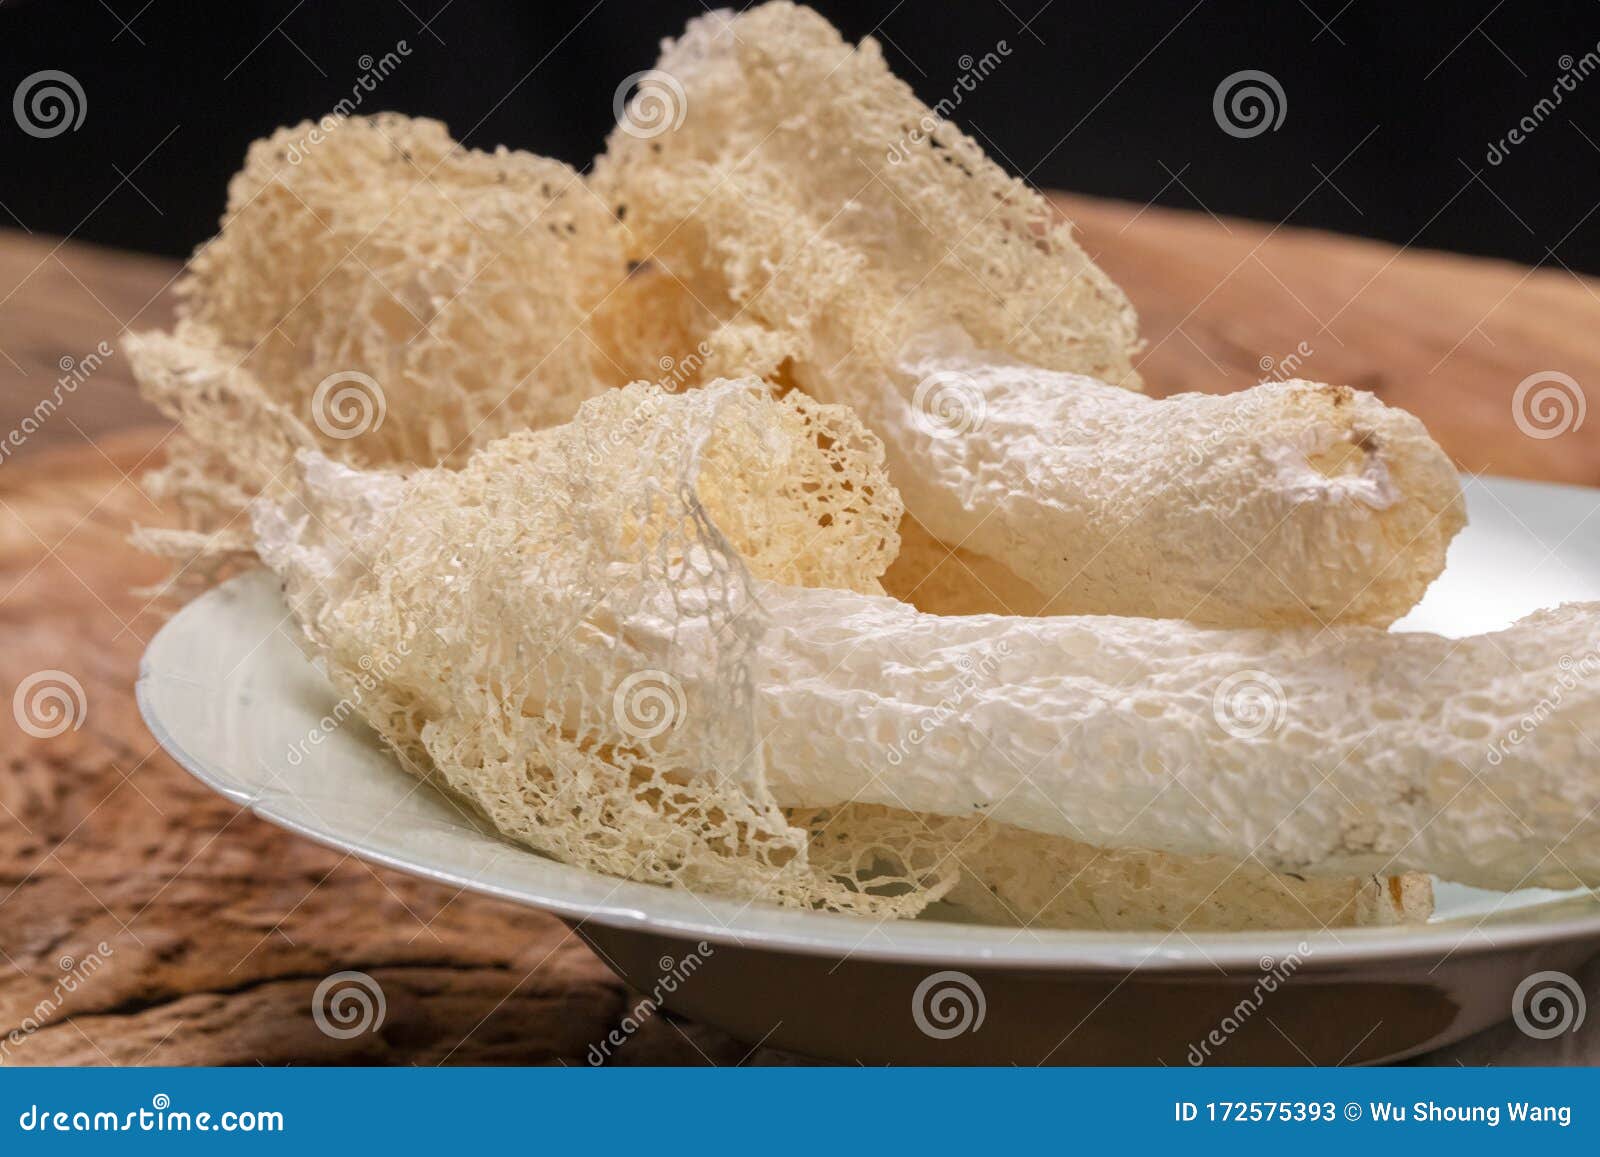 Nutritious Vegetarian Material Edible Fungus Bamboo Sheng Stock Image Image Of Nutrition Natural